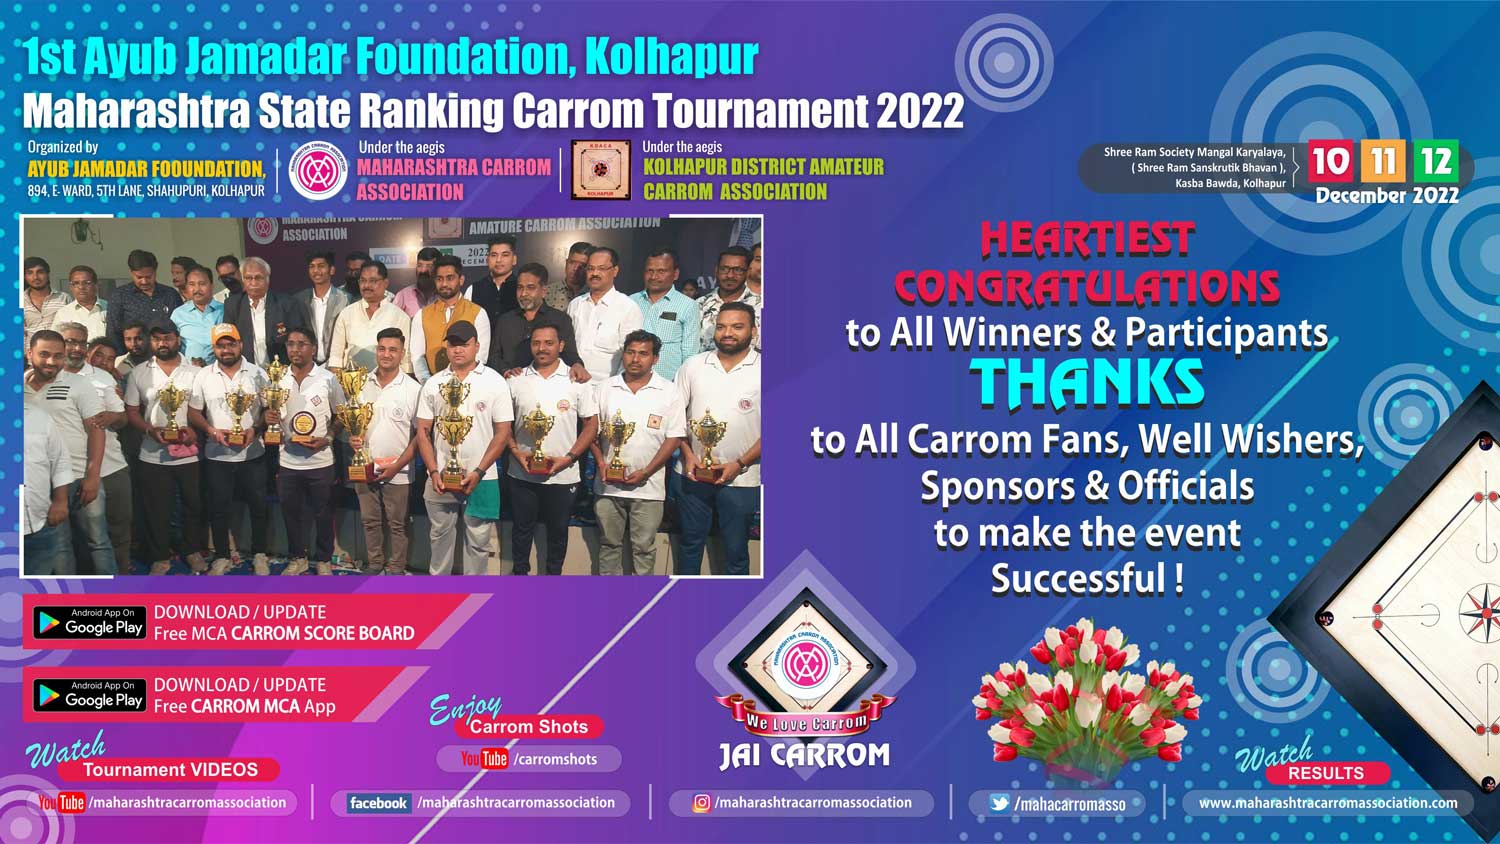 Ayub Jamadar Foundation 1st Maharashtra State Ranking Carrom Tournament 2022-23